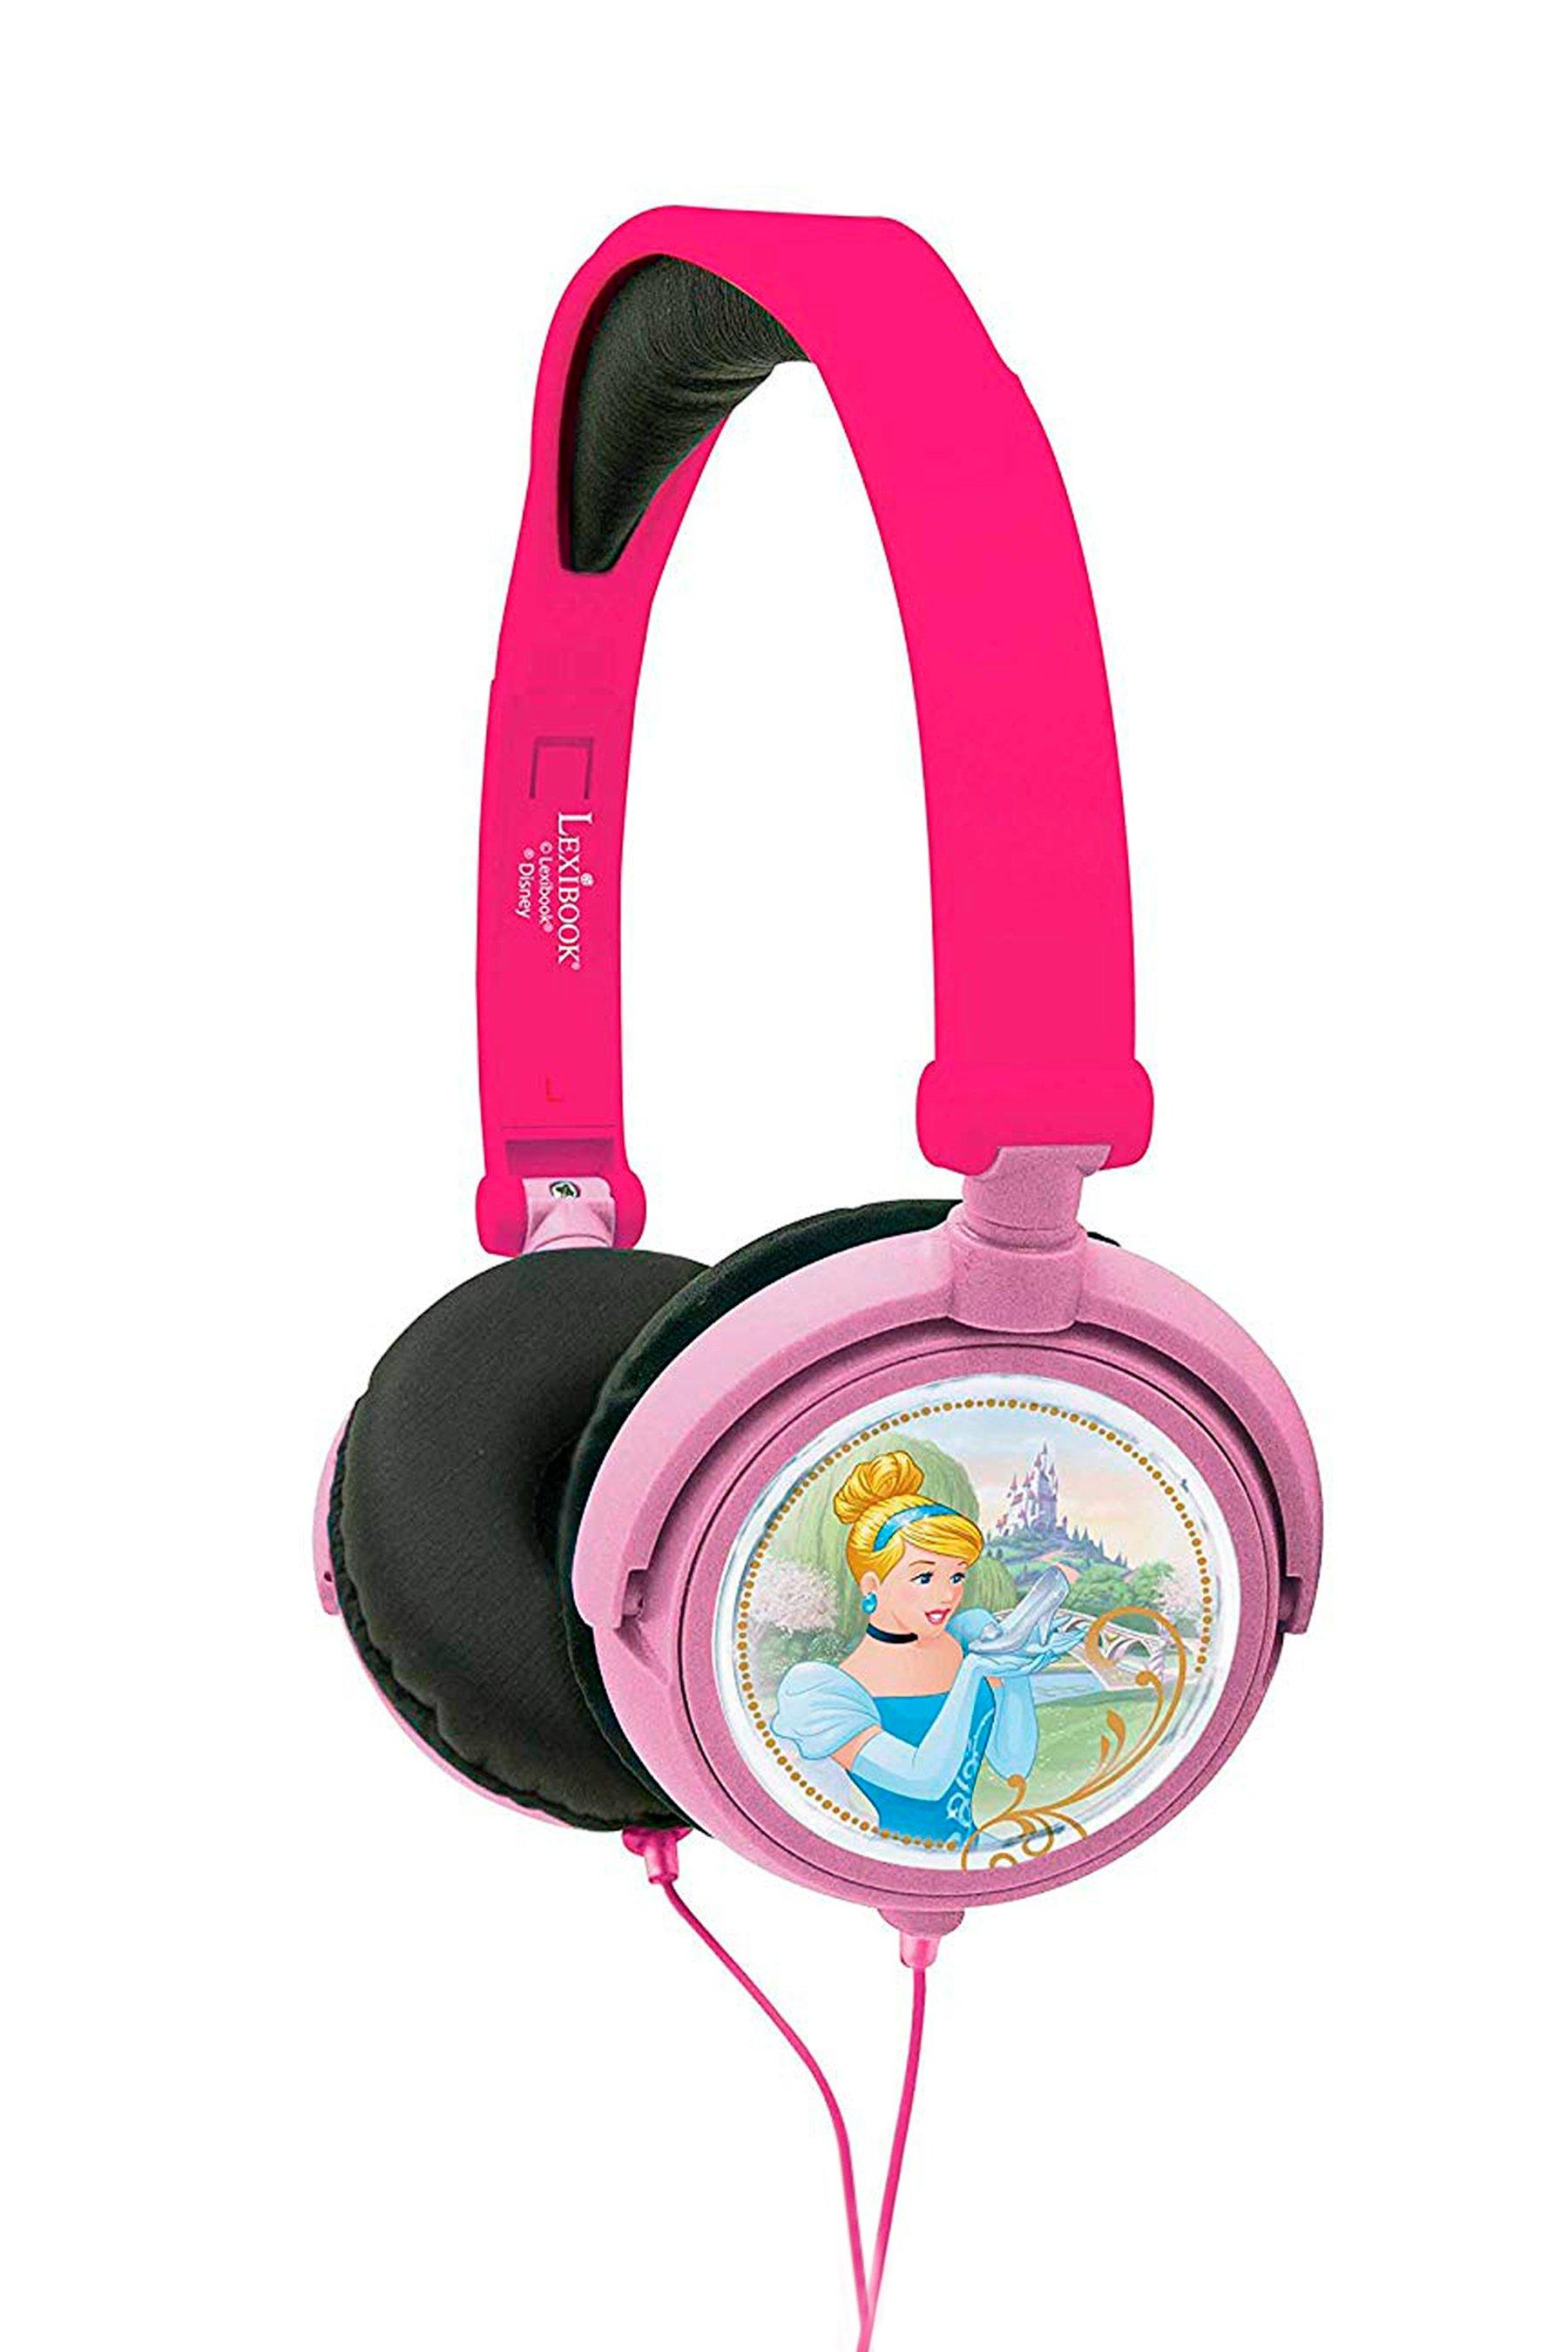 lexibook disney princess foldable stereo headphones with volume l... - pink